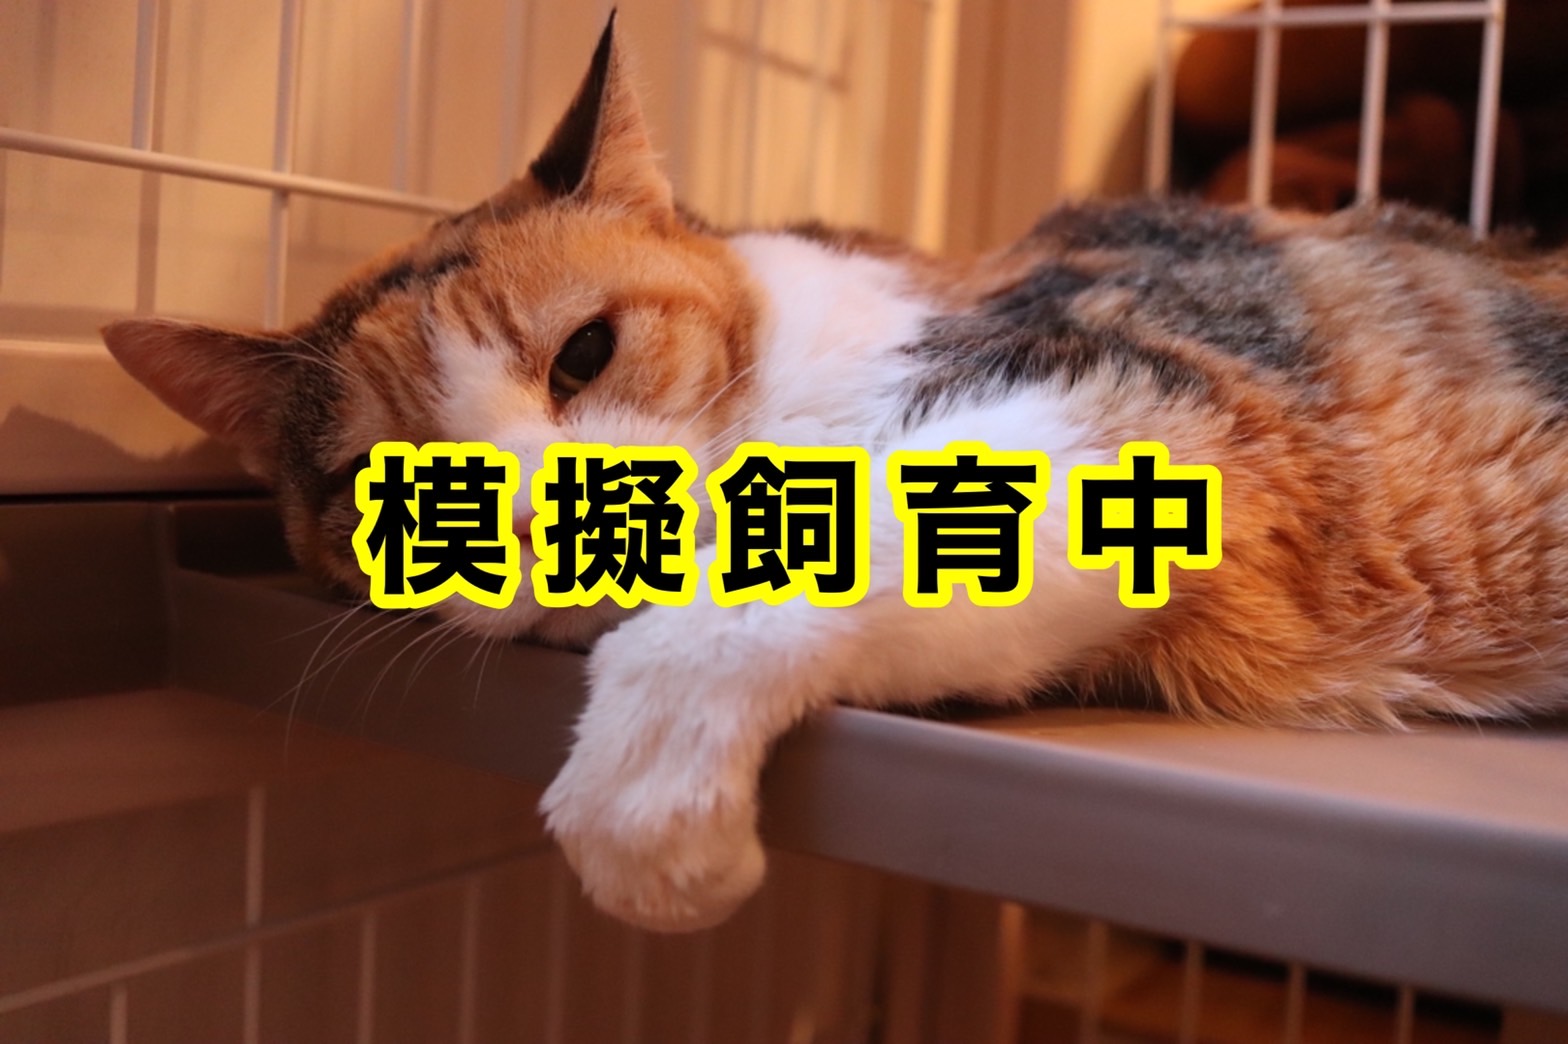 <ul>
<li>猫種：日本猫</li>
<li>名前（性別）：あけみ(女の子)</li>
<li>年齢：2009年頃生まれ</li>
<li>保護経緯：飼い主が高齢になり病気療養のため飼育困難</li>
</ul>
